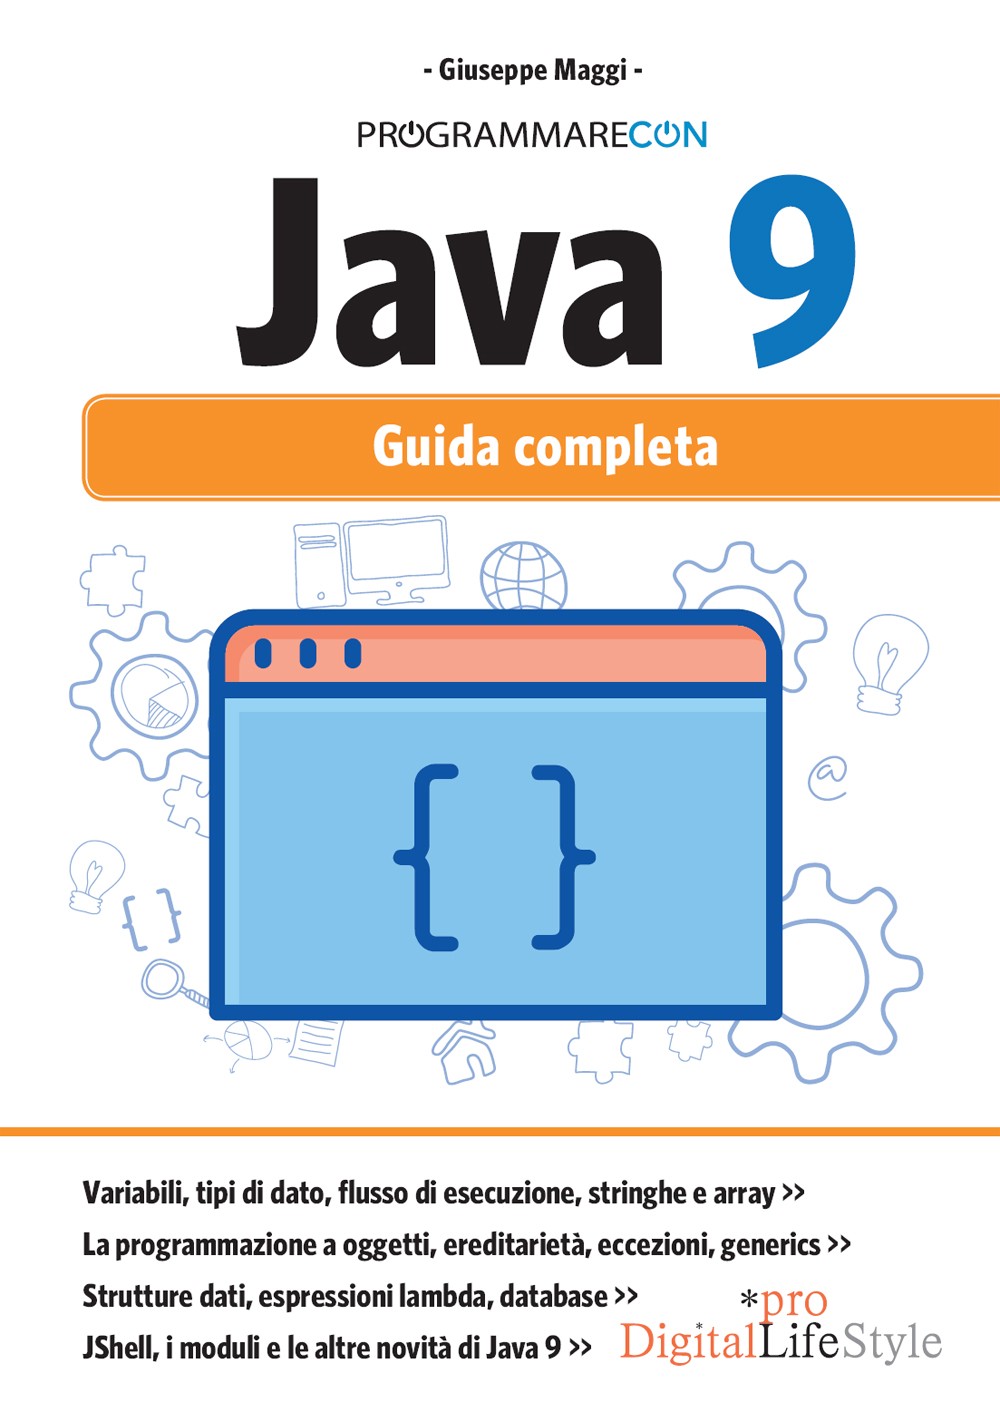 Java 9 - Librerie.coop